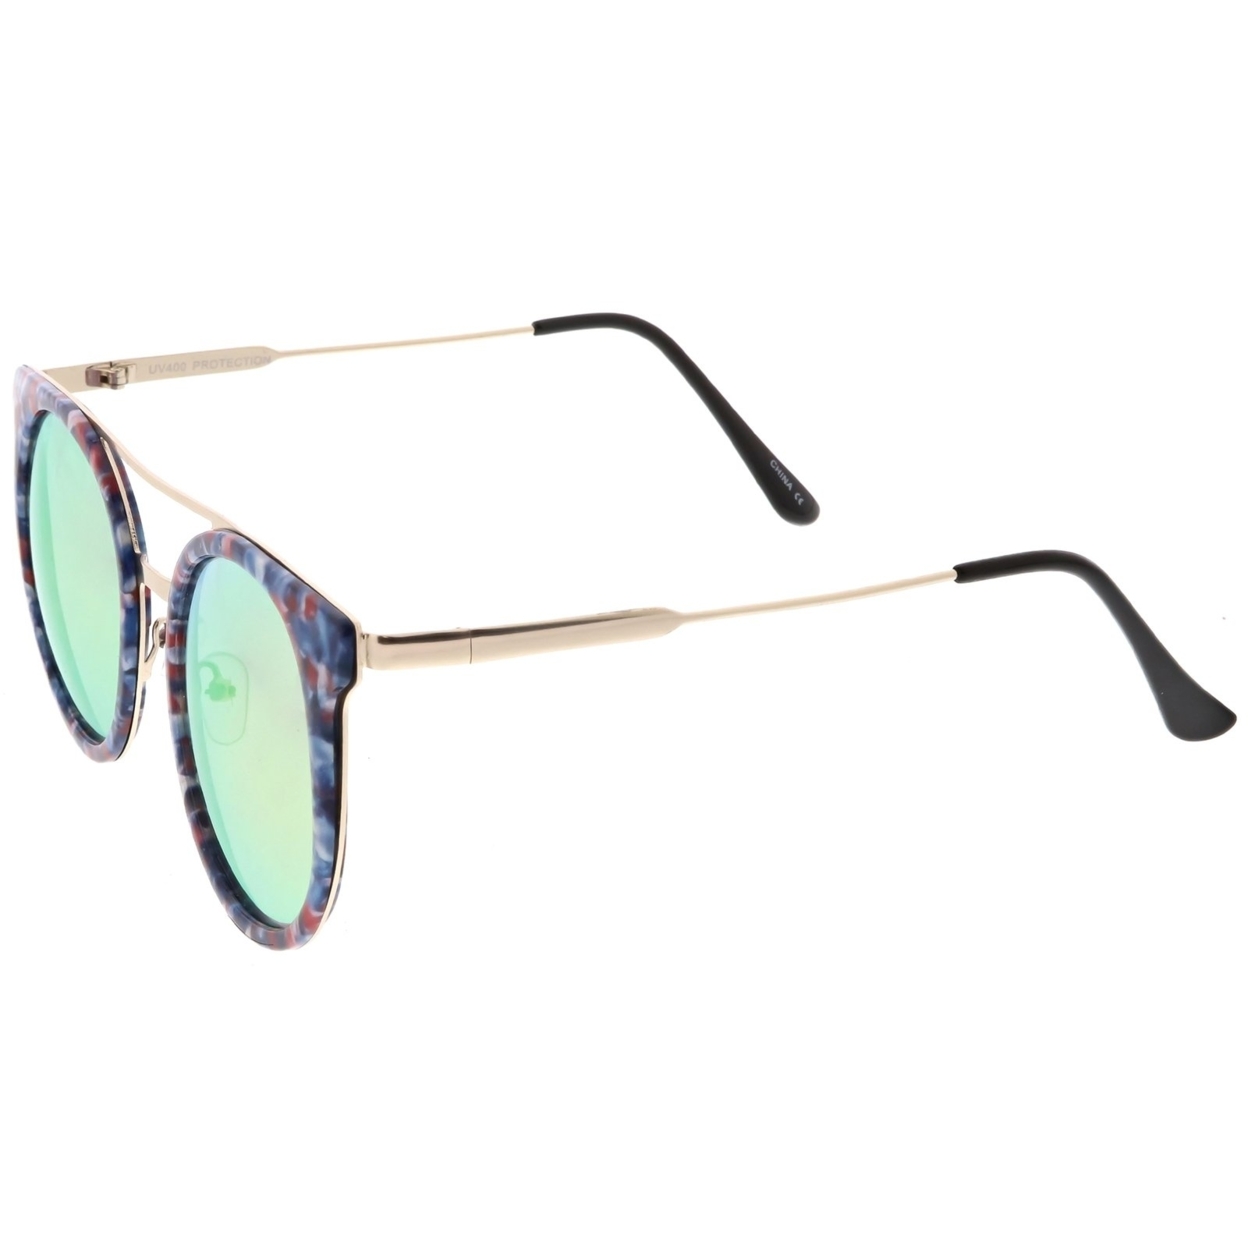 Modern Horn Rimmed Sunglasses Sleek Double Nose Bridge Round Color Mirrored Lens 51mm - Beige Gold / Silver Mirror